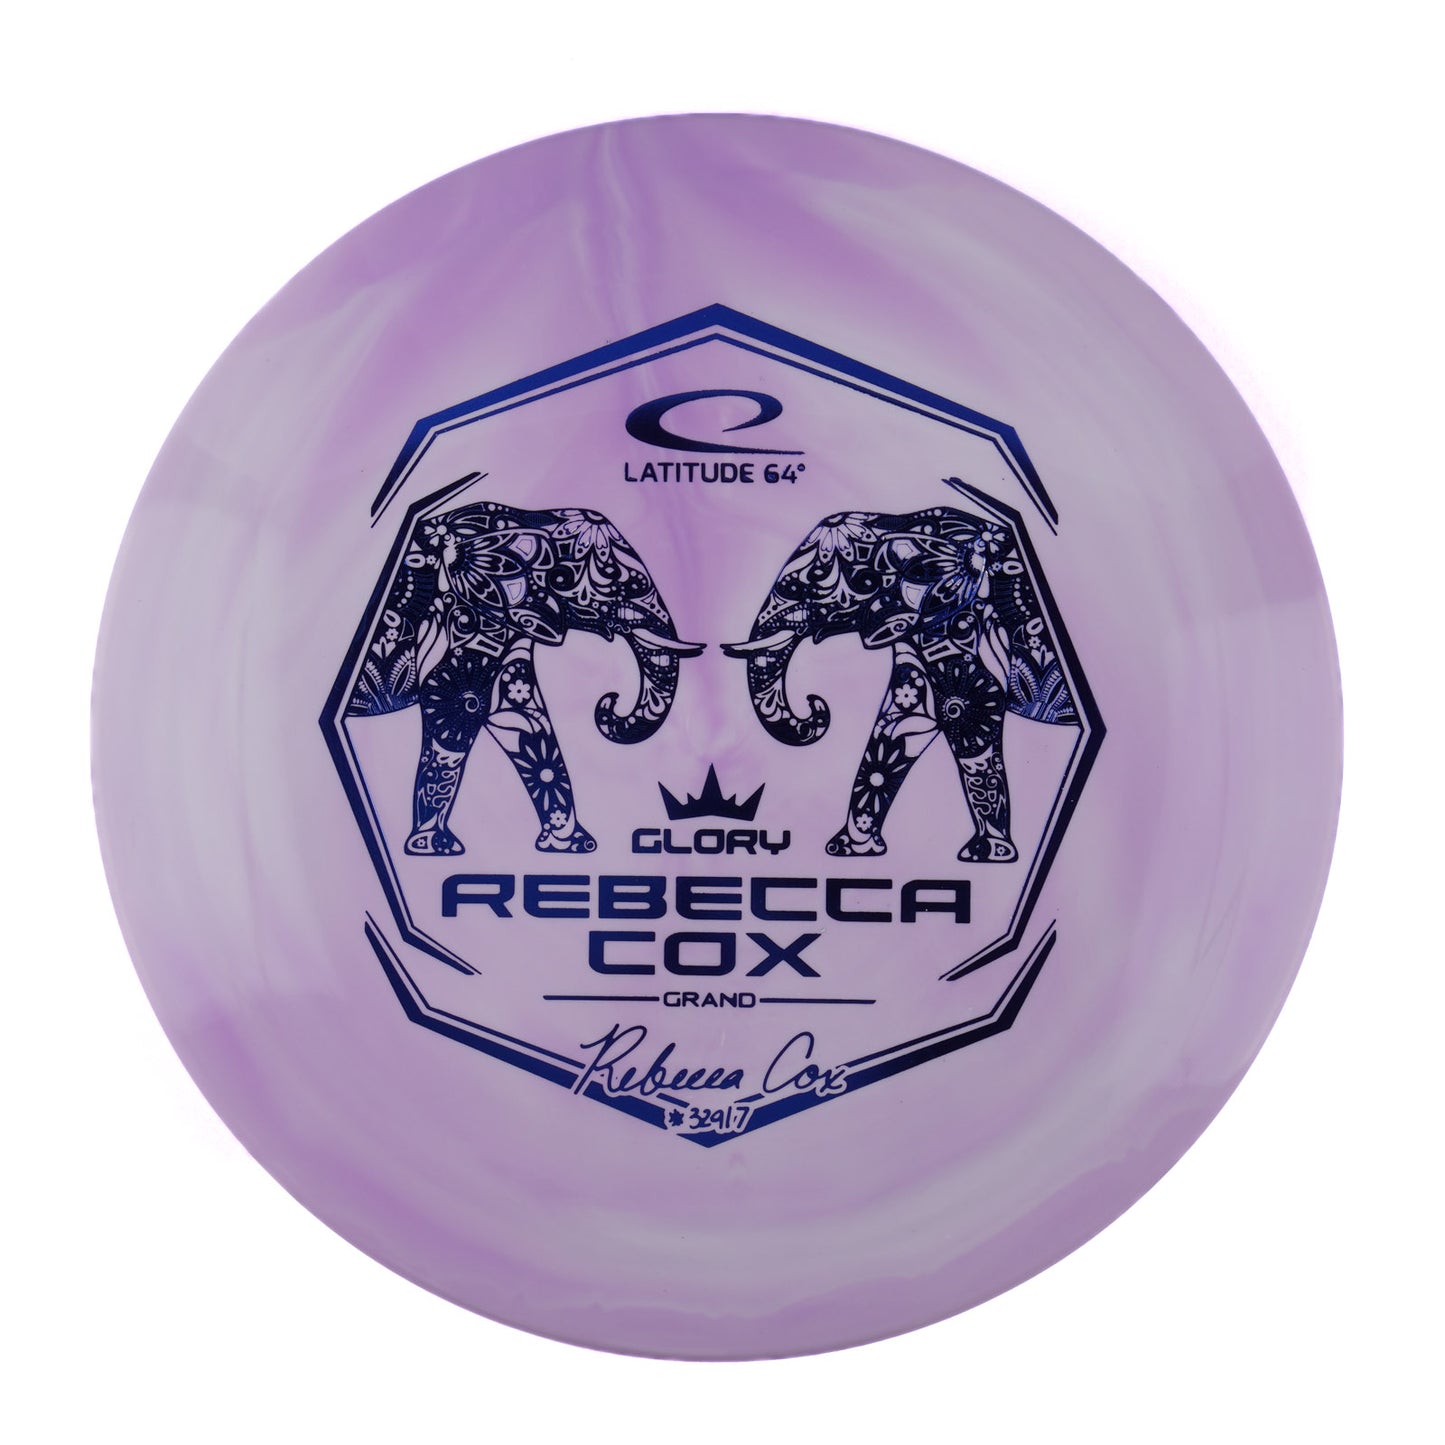 Latitude 64 Glory - Rebecca Cox Royal Grand 176g | Style 0008